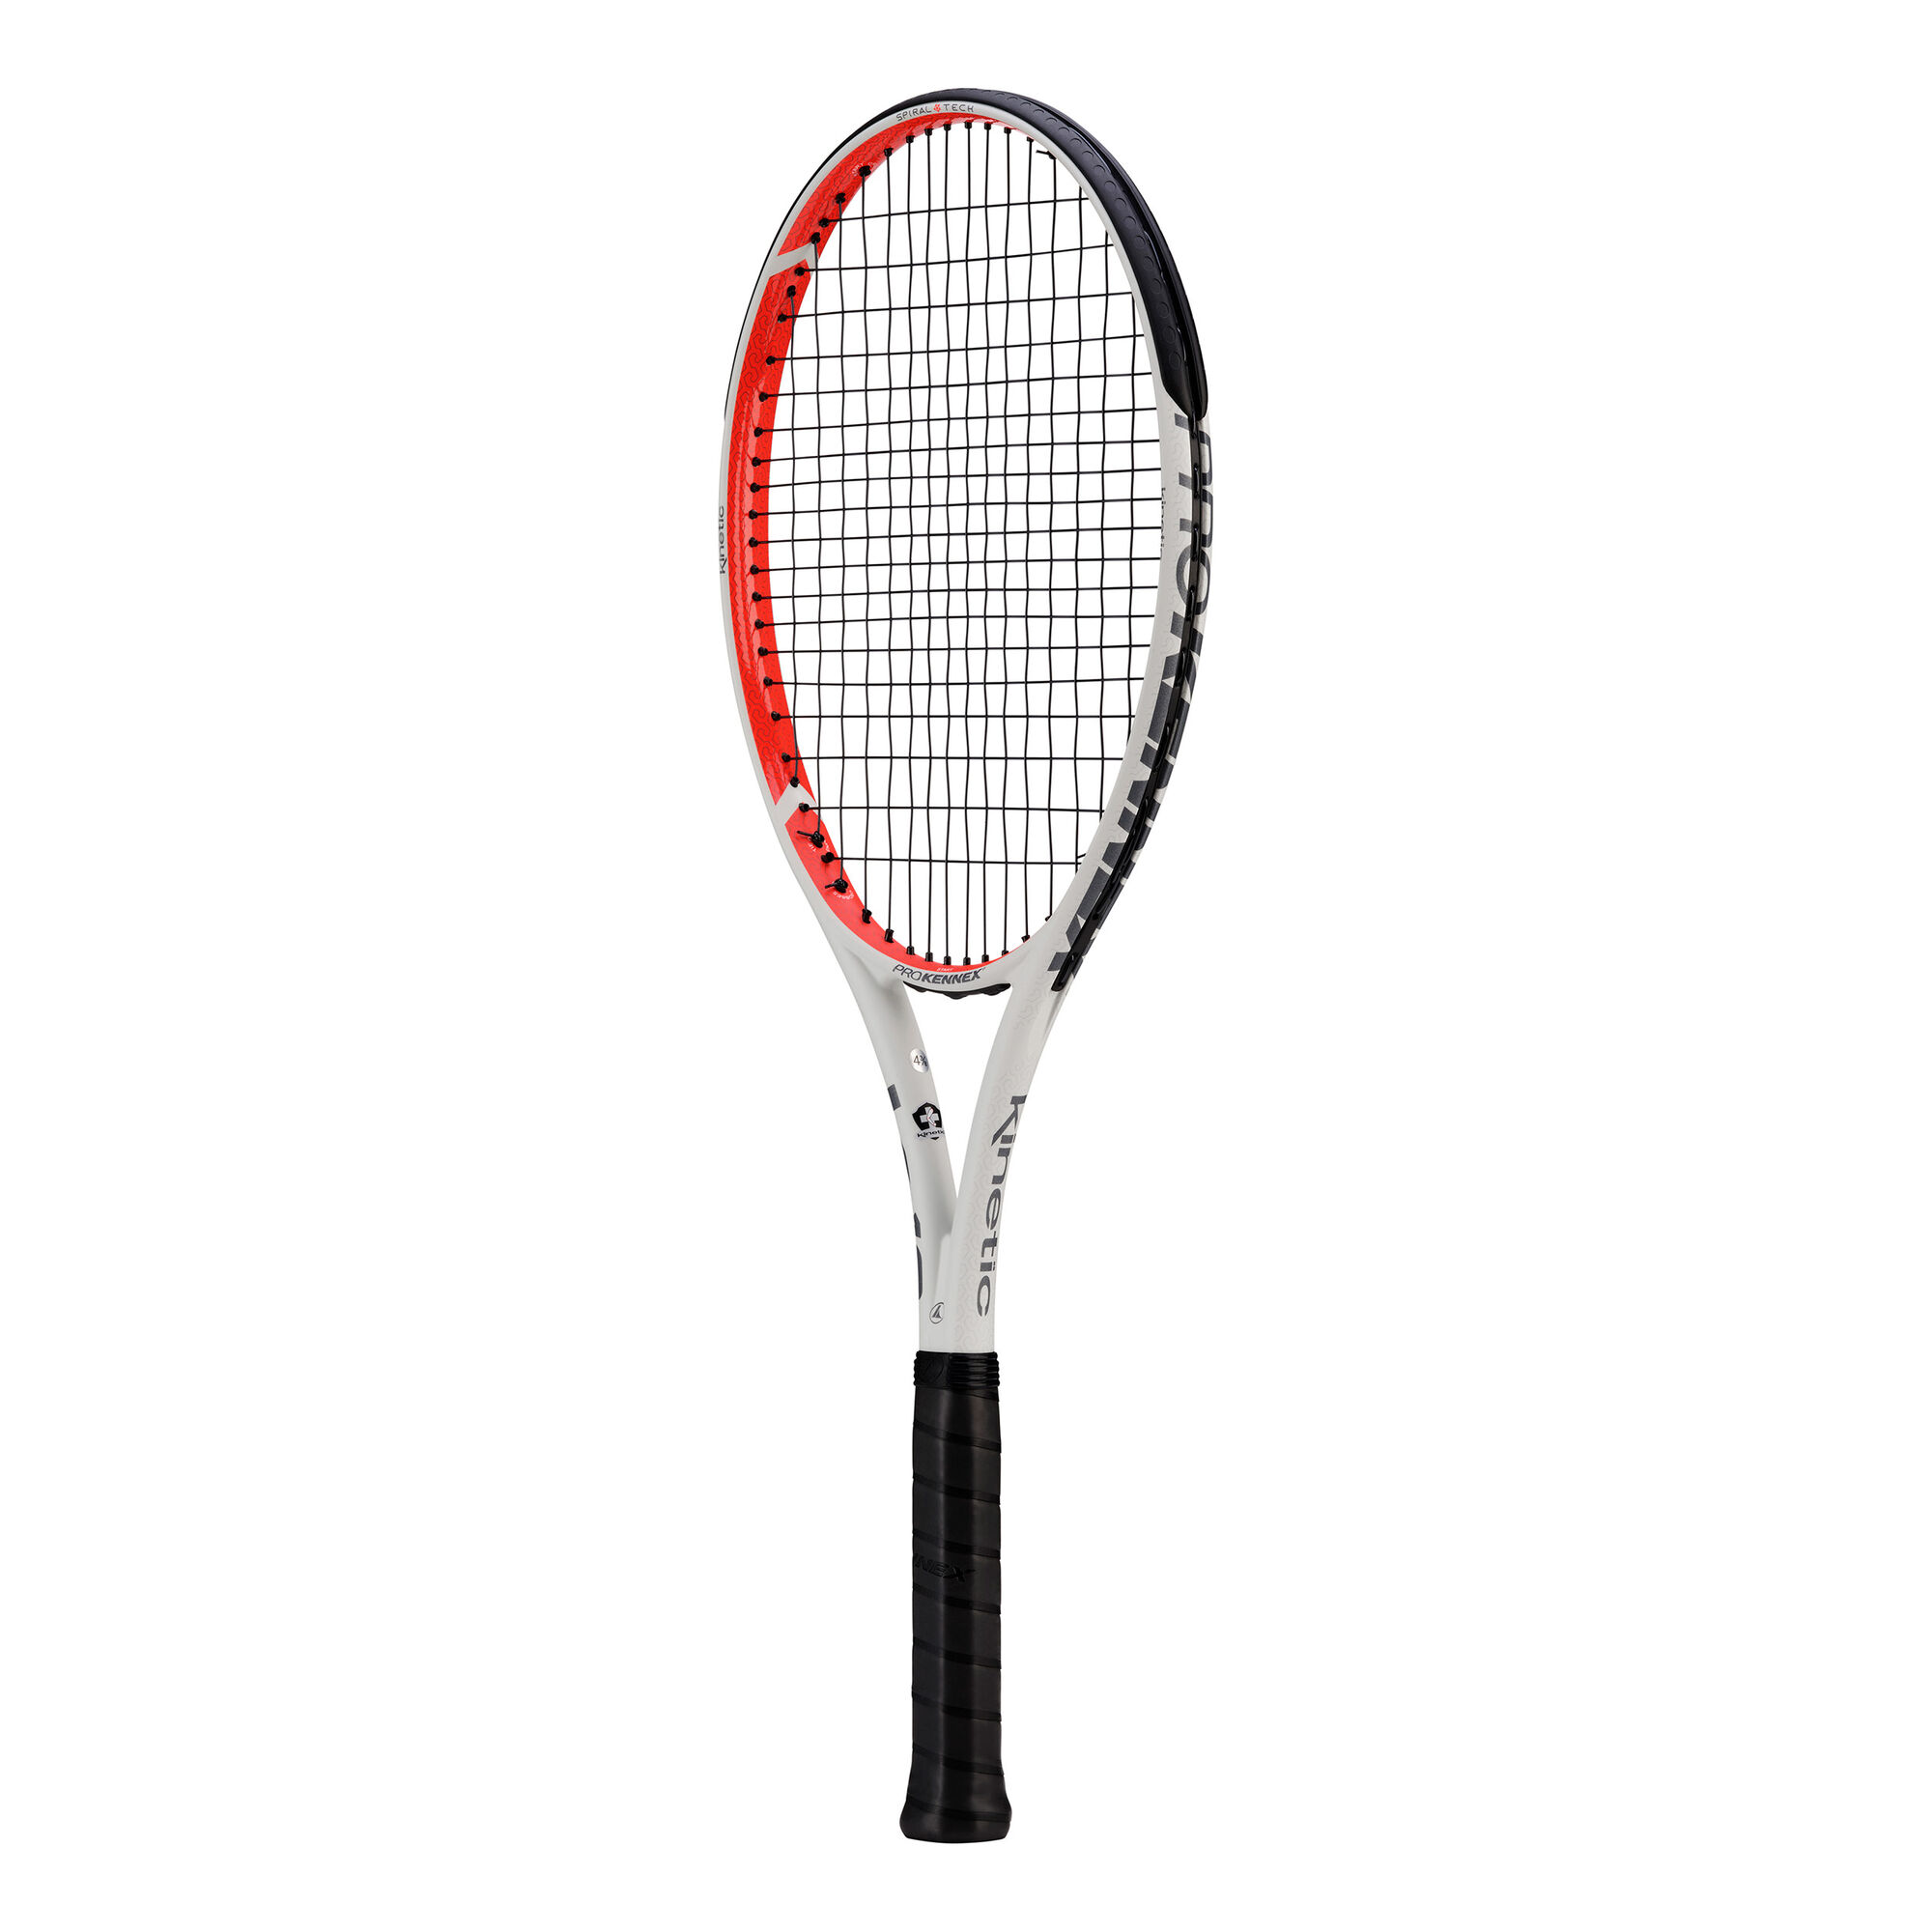 Buy PROKENNEX Kinetic 10 (305g) COM Point | online Tennis